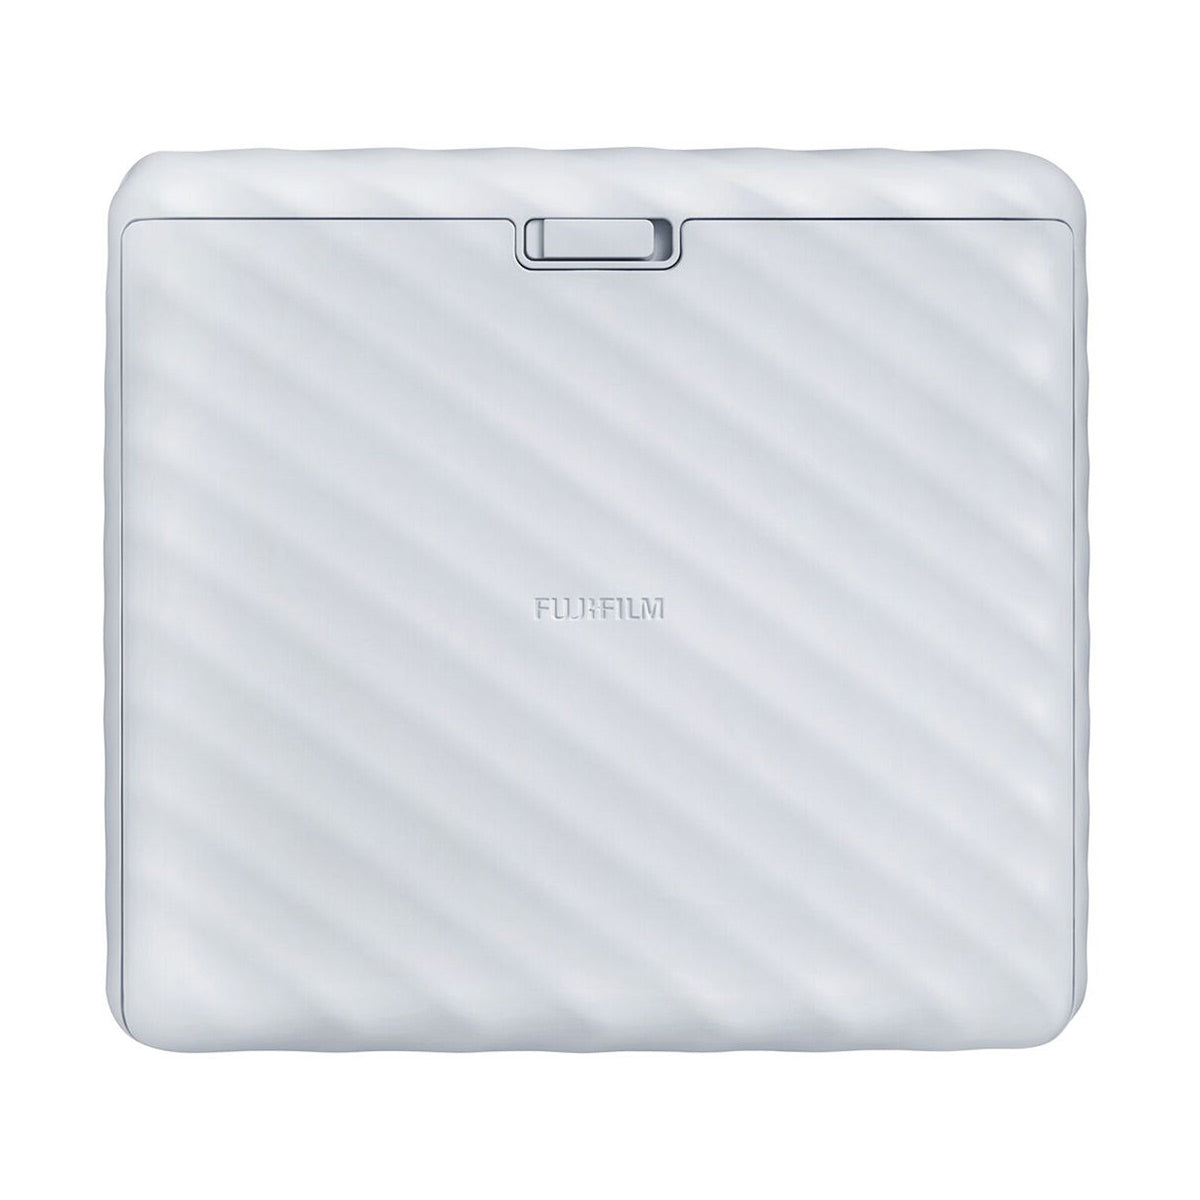 Fujifilm INSTAX Wide Link Smartphone Printer (Ash White)